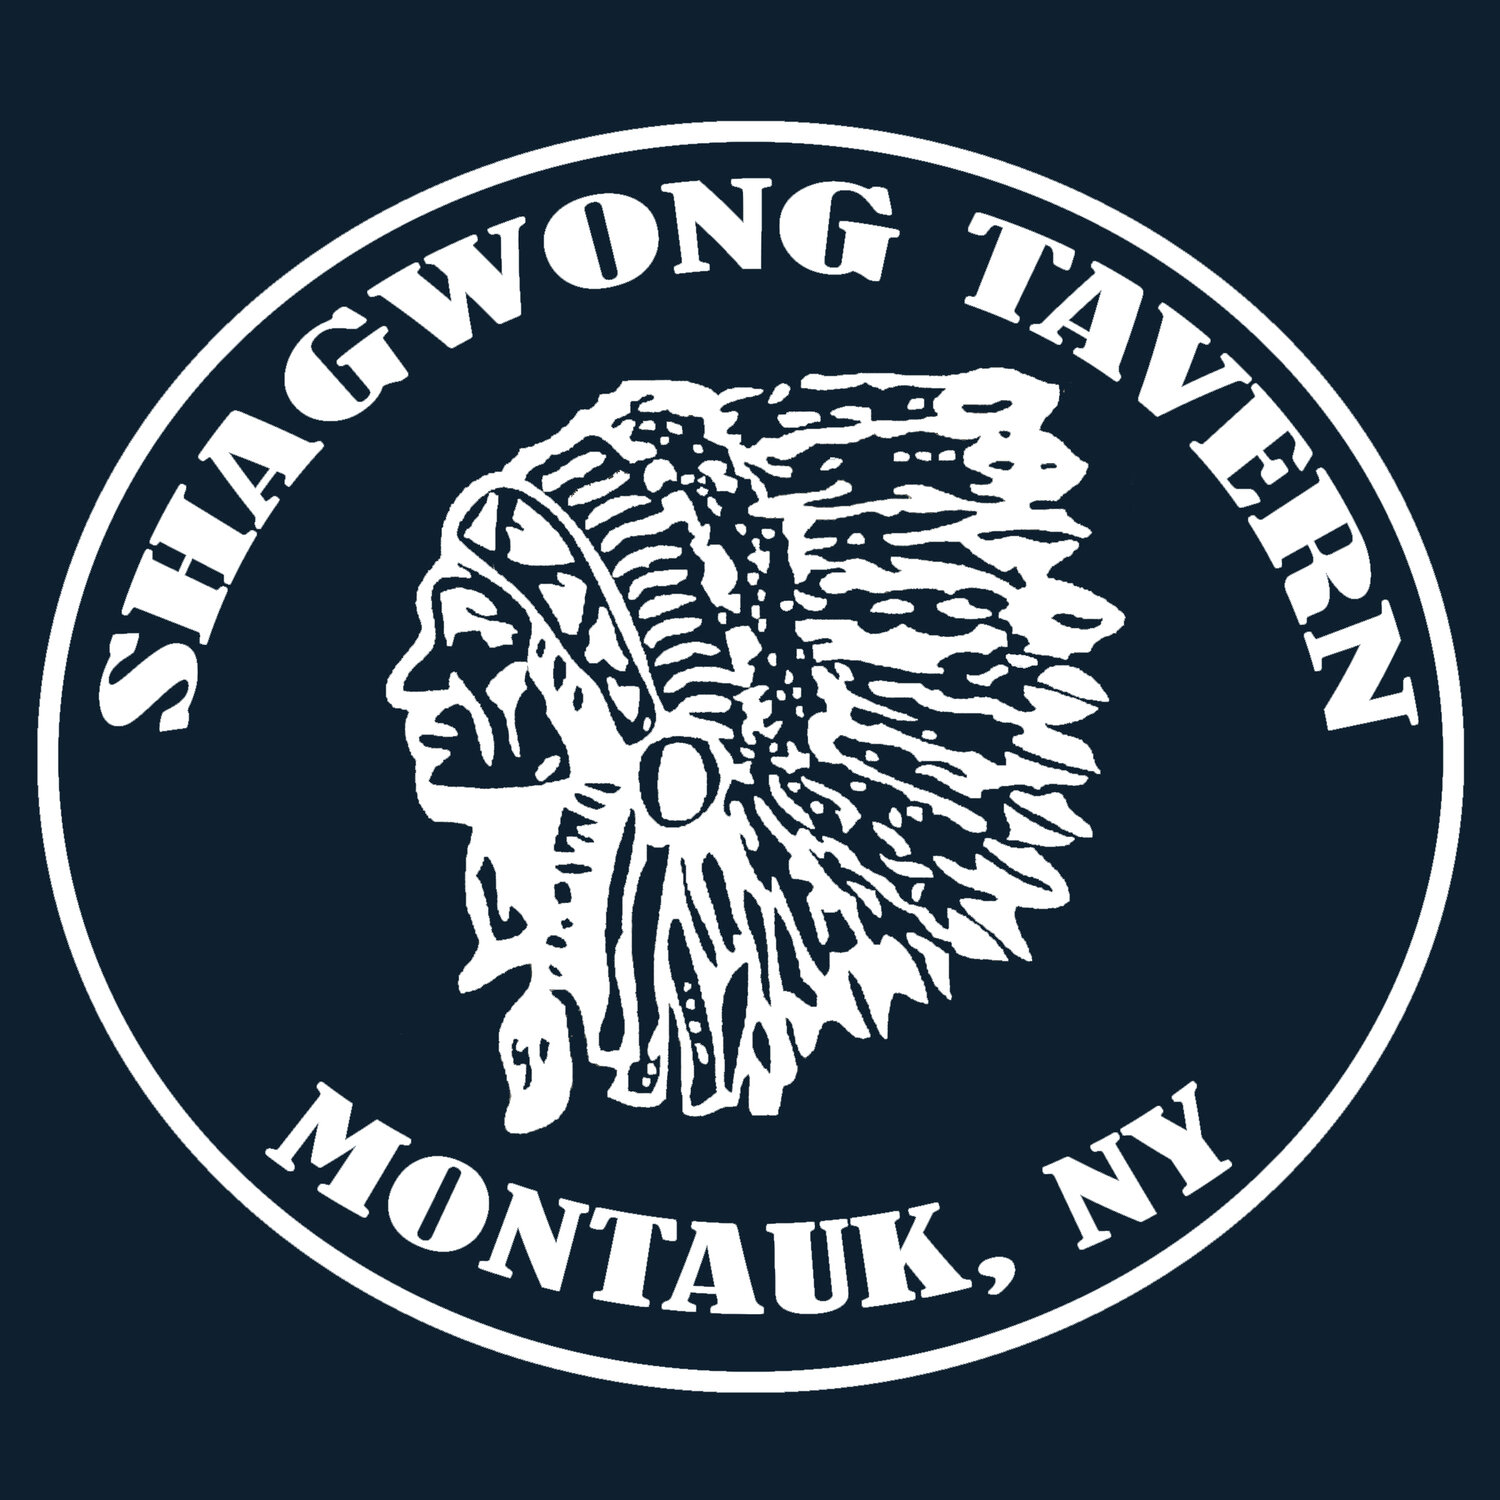 Shagwong Tavern